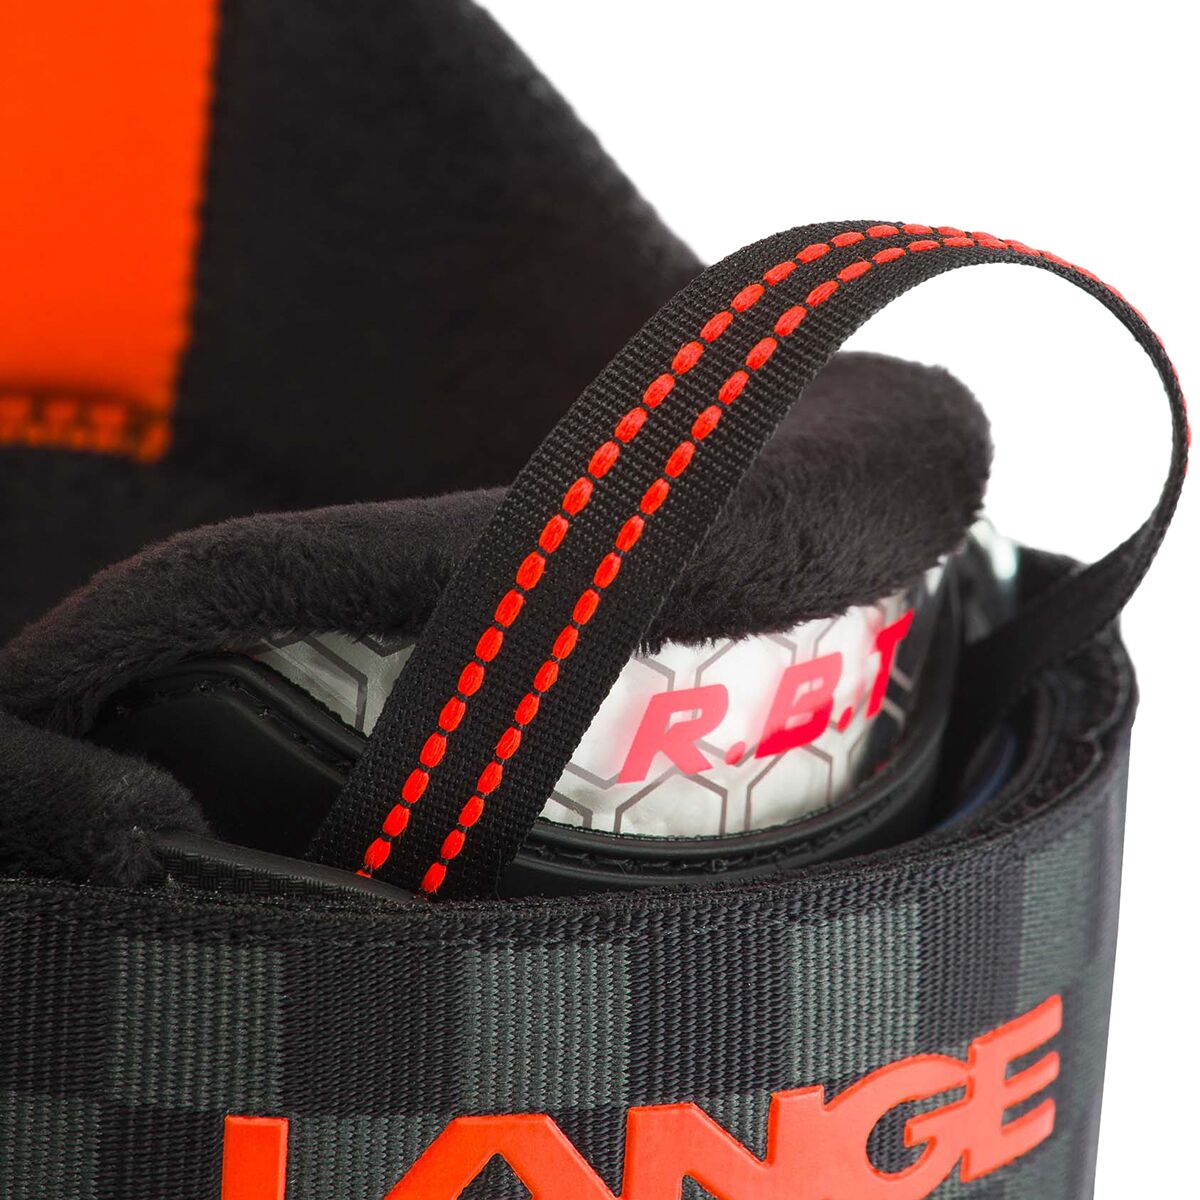 Lange Men's RX-120 LV Ski Boot 2020-2021 — Ski Pro AZ